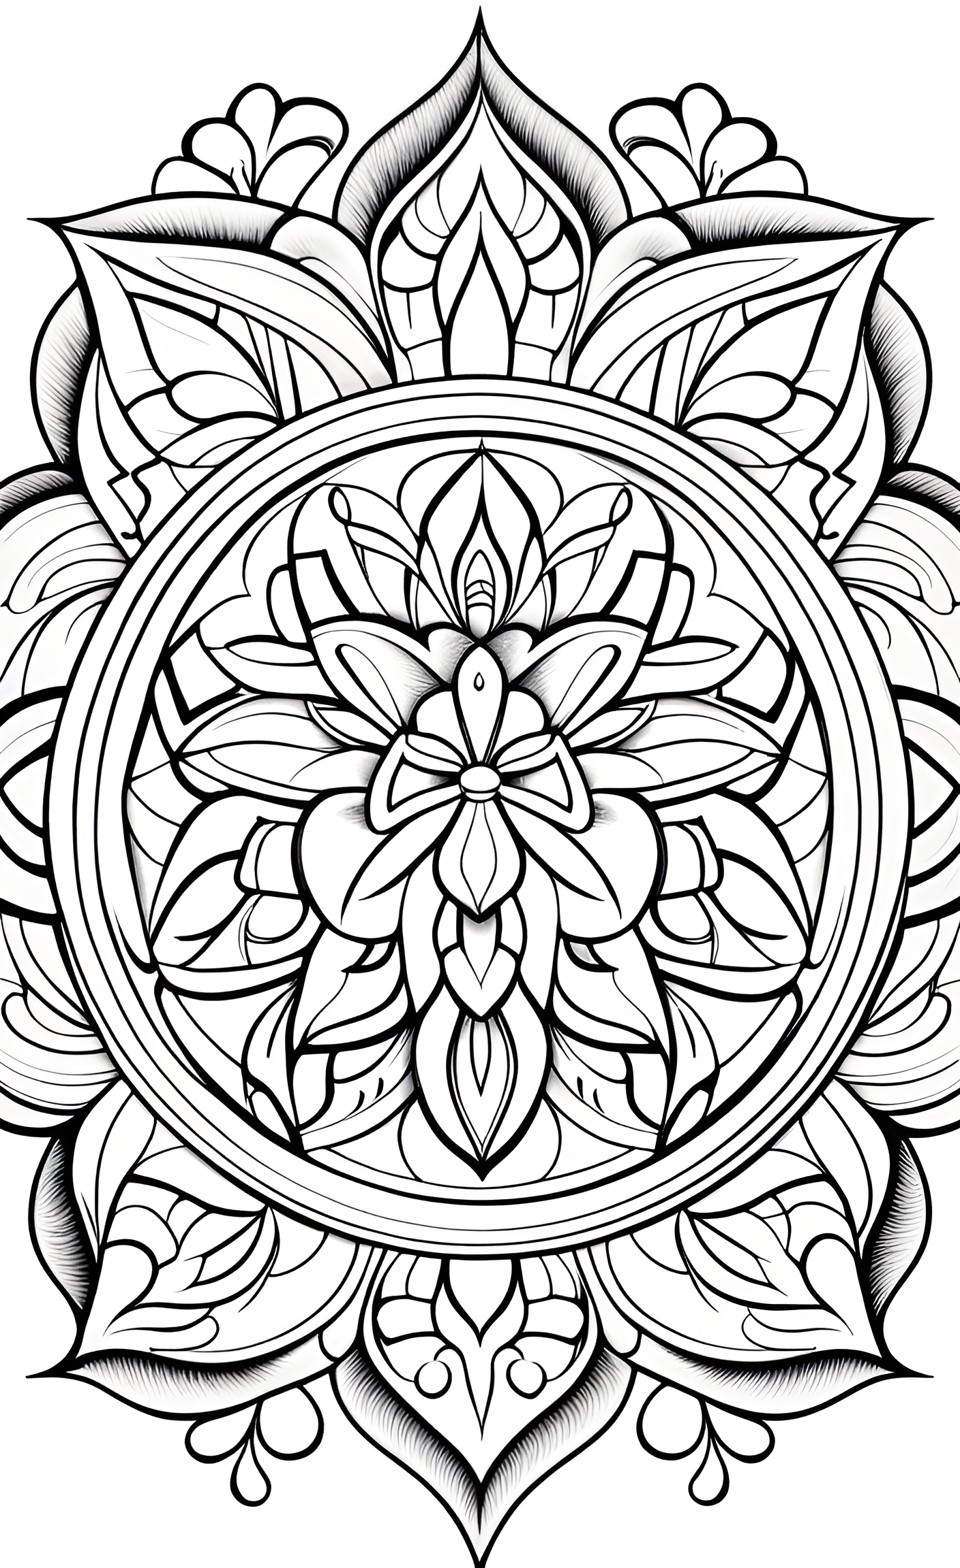 Mandala Coloring Pages | Mandala Boyama Sayfaları